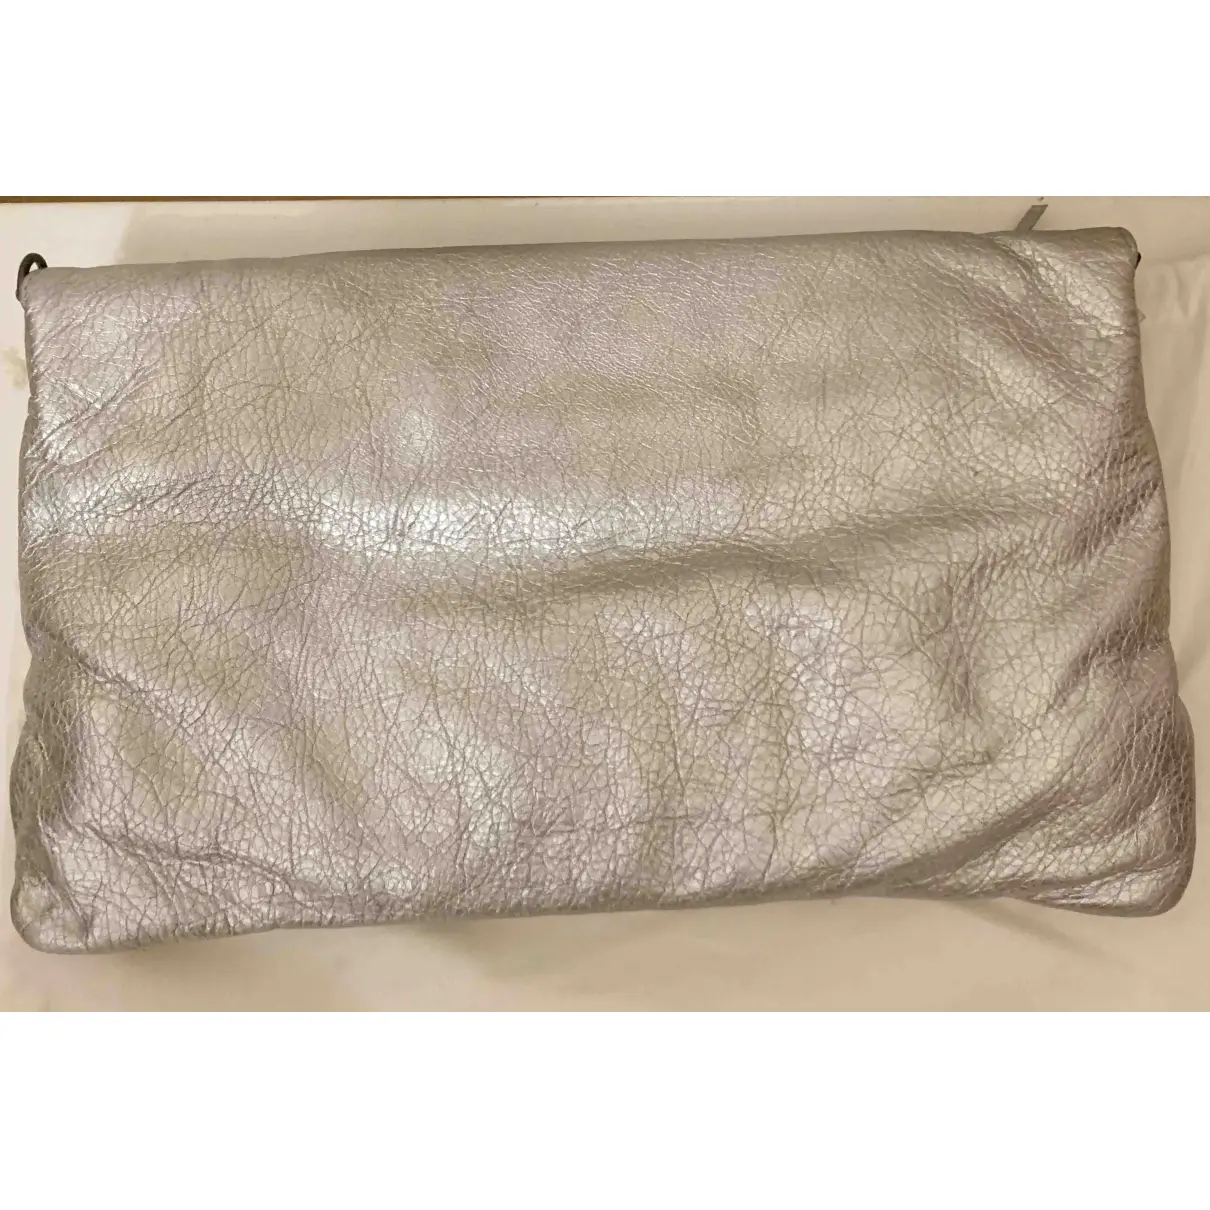 Buy Balenciaga Envelop leather clutch bag online